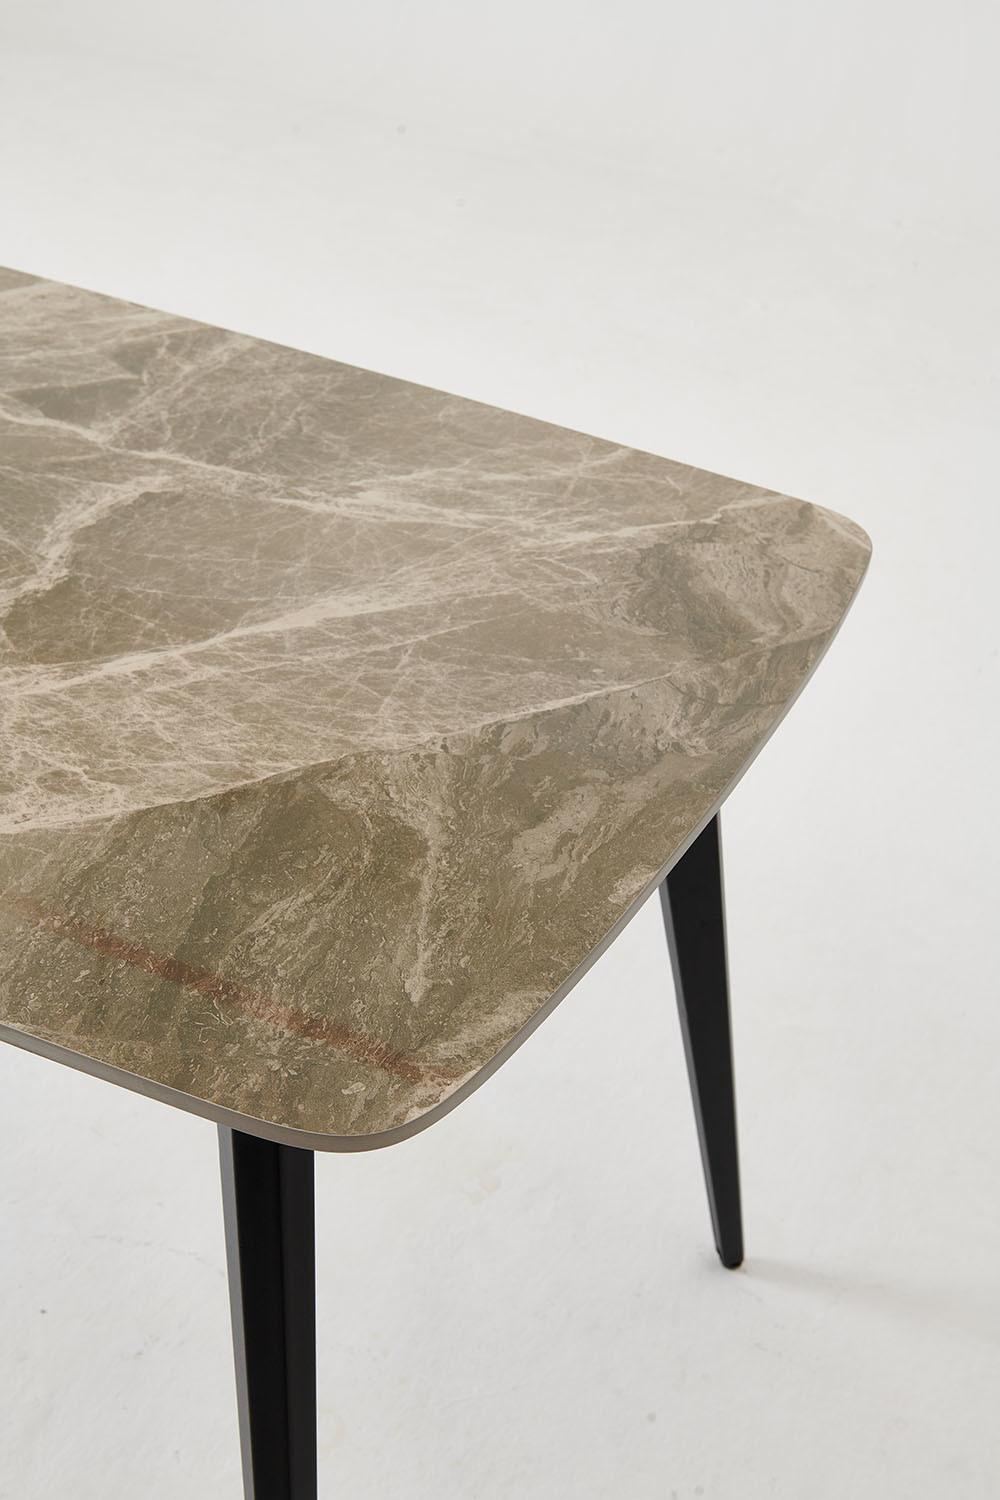 High Quality Carbon Steel Legs Pandora Rock Plate Table